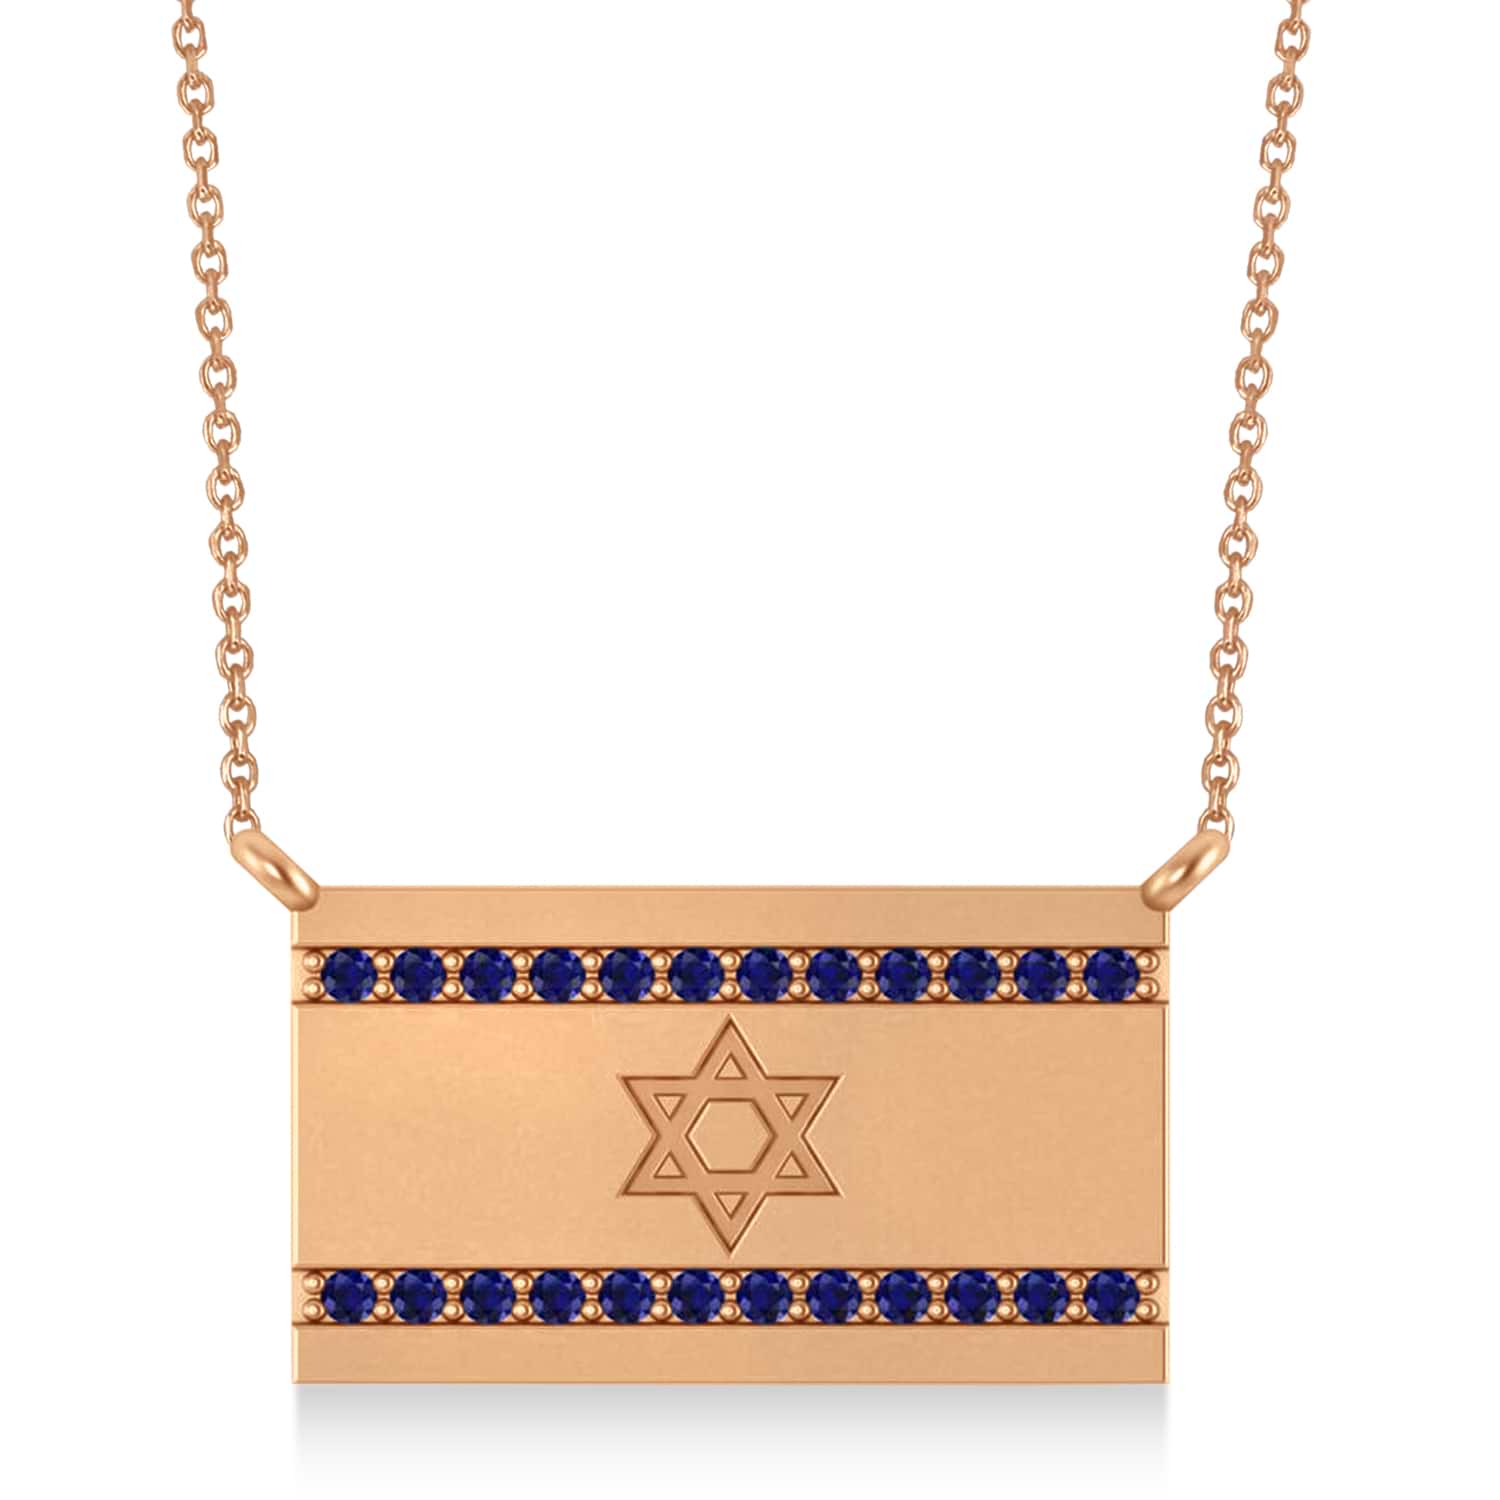 Blue Sapphire Israel Flag Pendant Necklace 14K Rose Gold (0.24 ct)